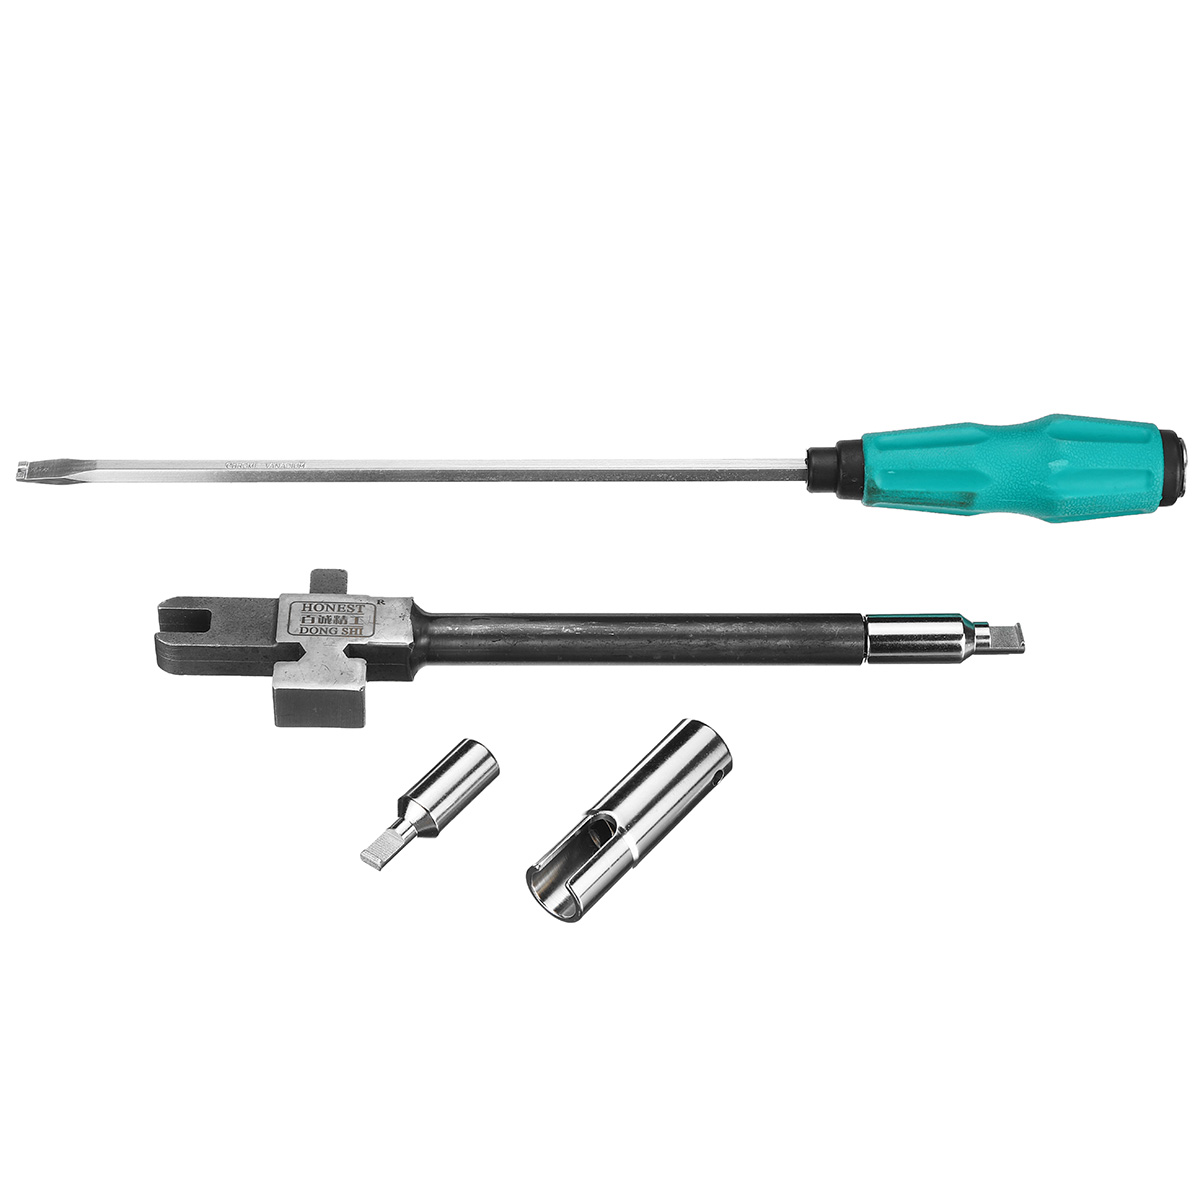 Locksmith-Supplies-Locksmith-Repair-Tools-Emergency-Lock-Cylinder-5-in-1-Twist-off-Consumables-1871446-1